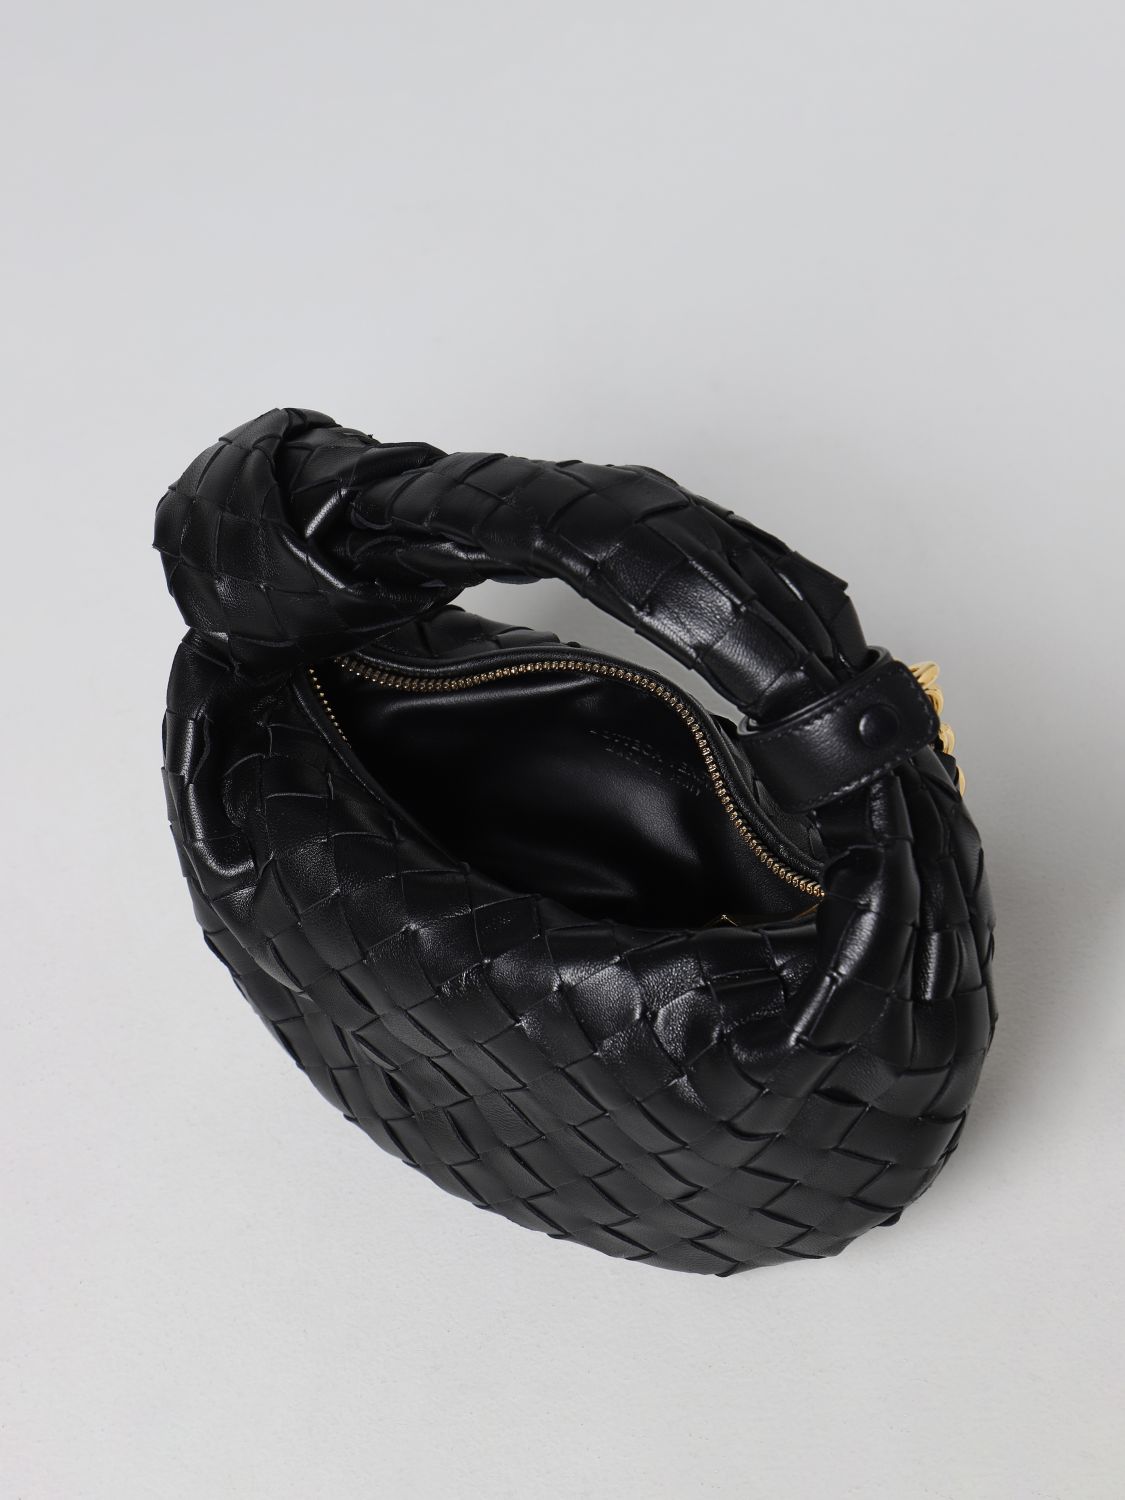 BOTTEGA VENETA: Jodie leather bag - Black | Bottega Veneta mini bag ...